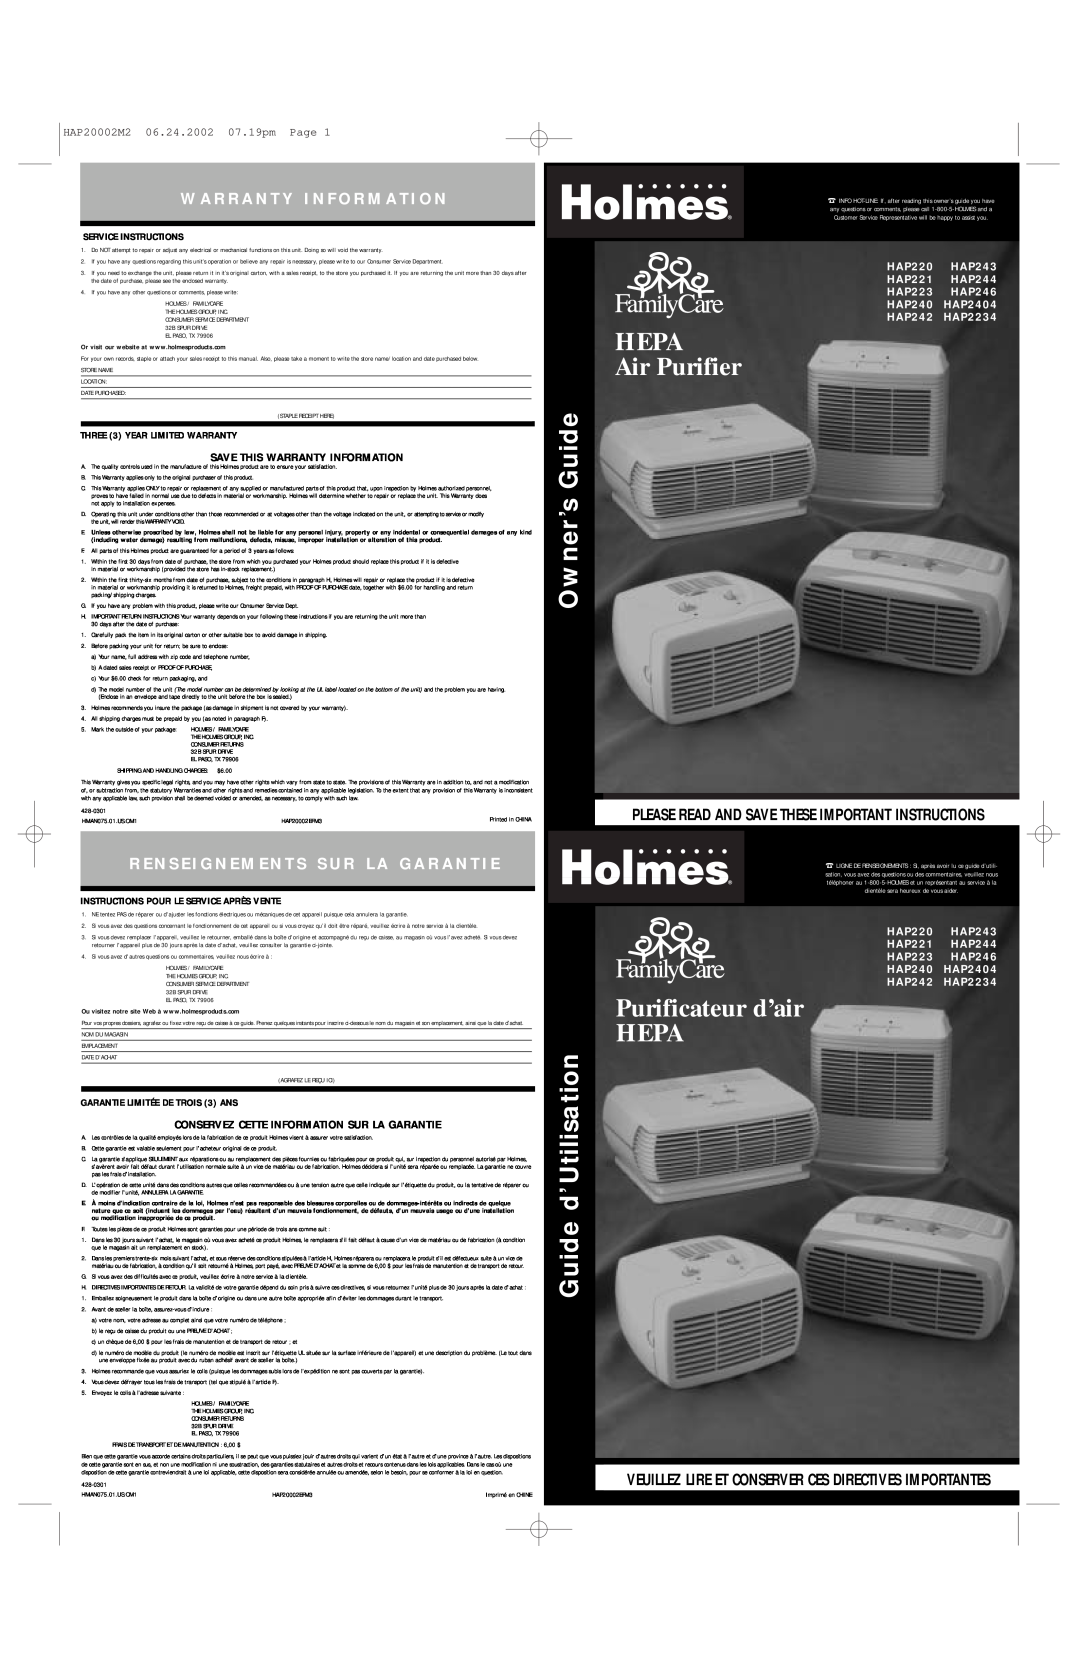 Holmes HAP2404 warranty W A R R A N T Y I N F O R M A T I O N, HEPA Air Purifier, Purificateur d’air HEPA, Owner’s Guide 